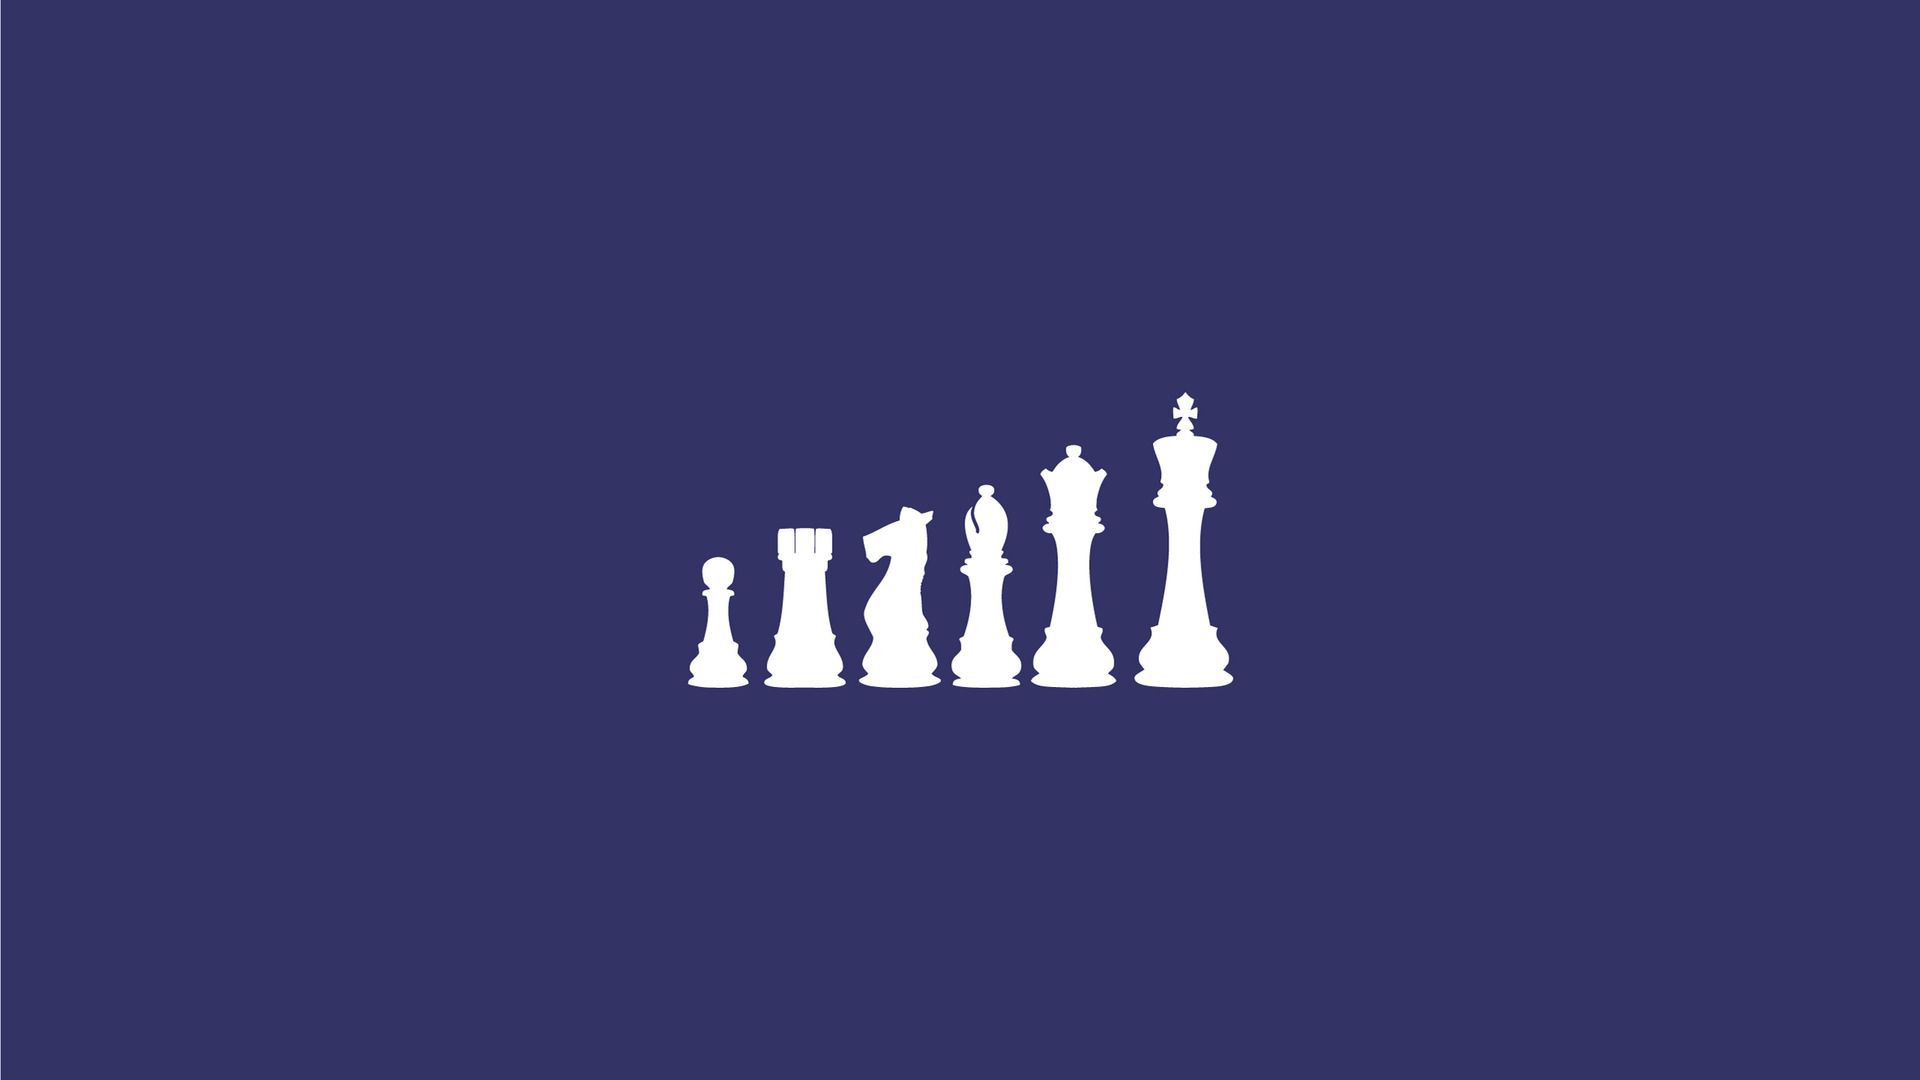 Minimal Chess Pieces Illustration Desktop Wallpaper